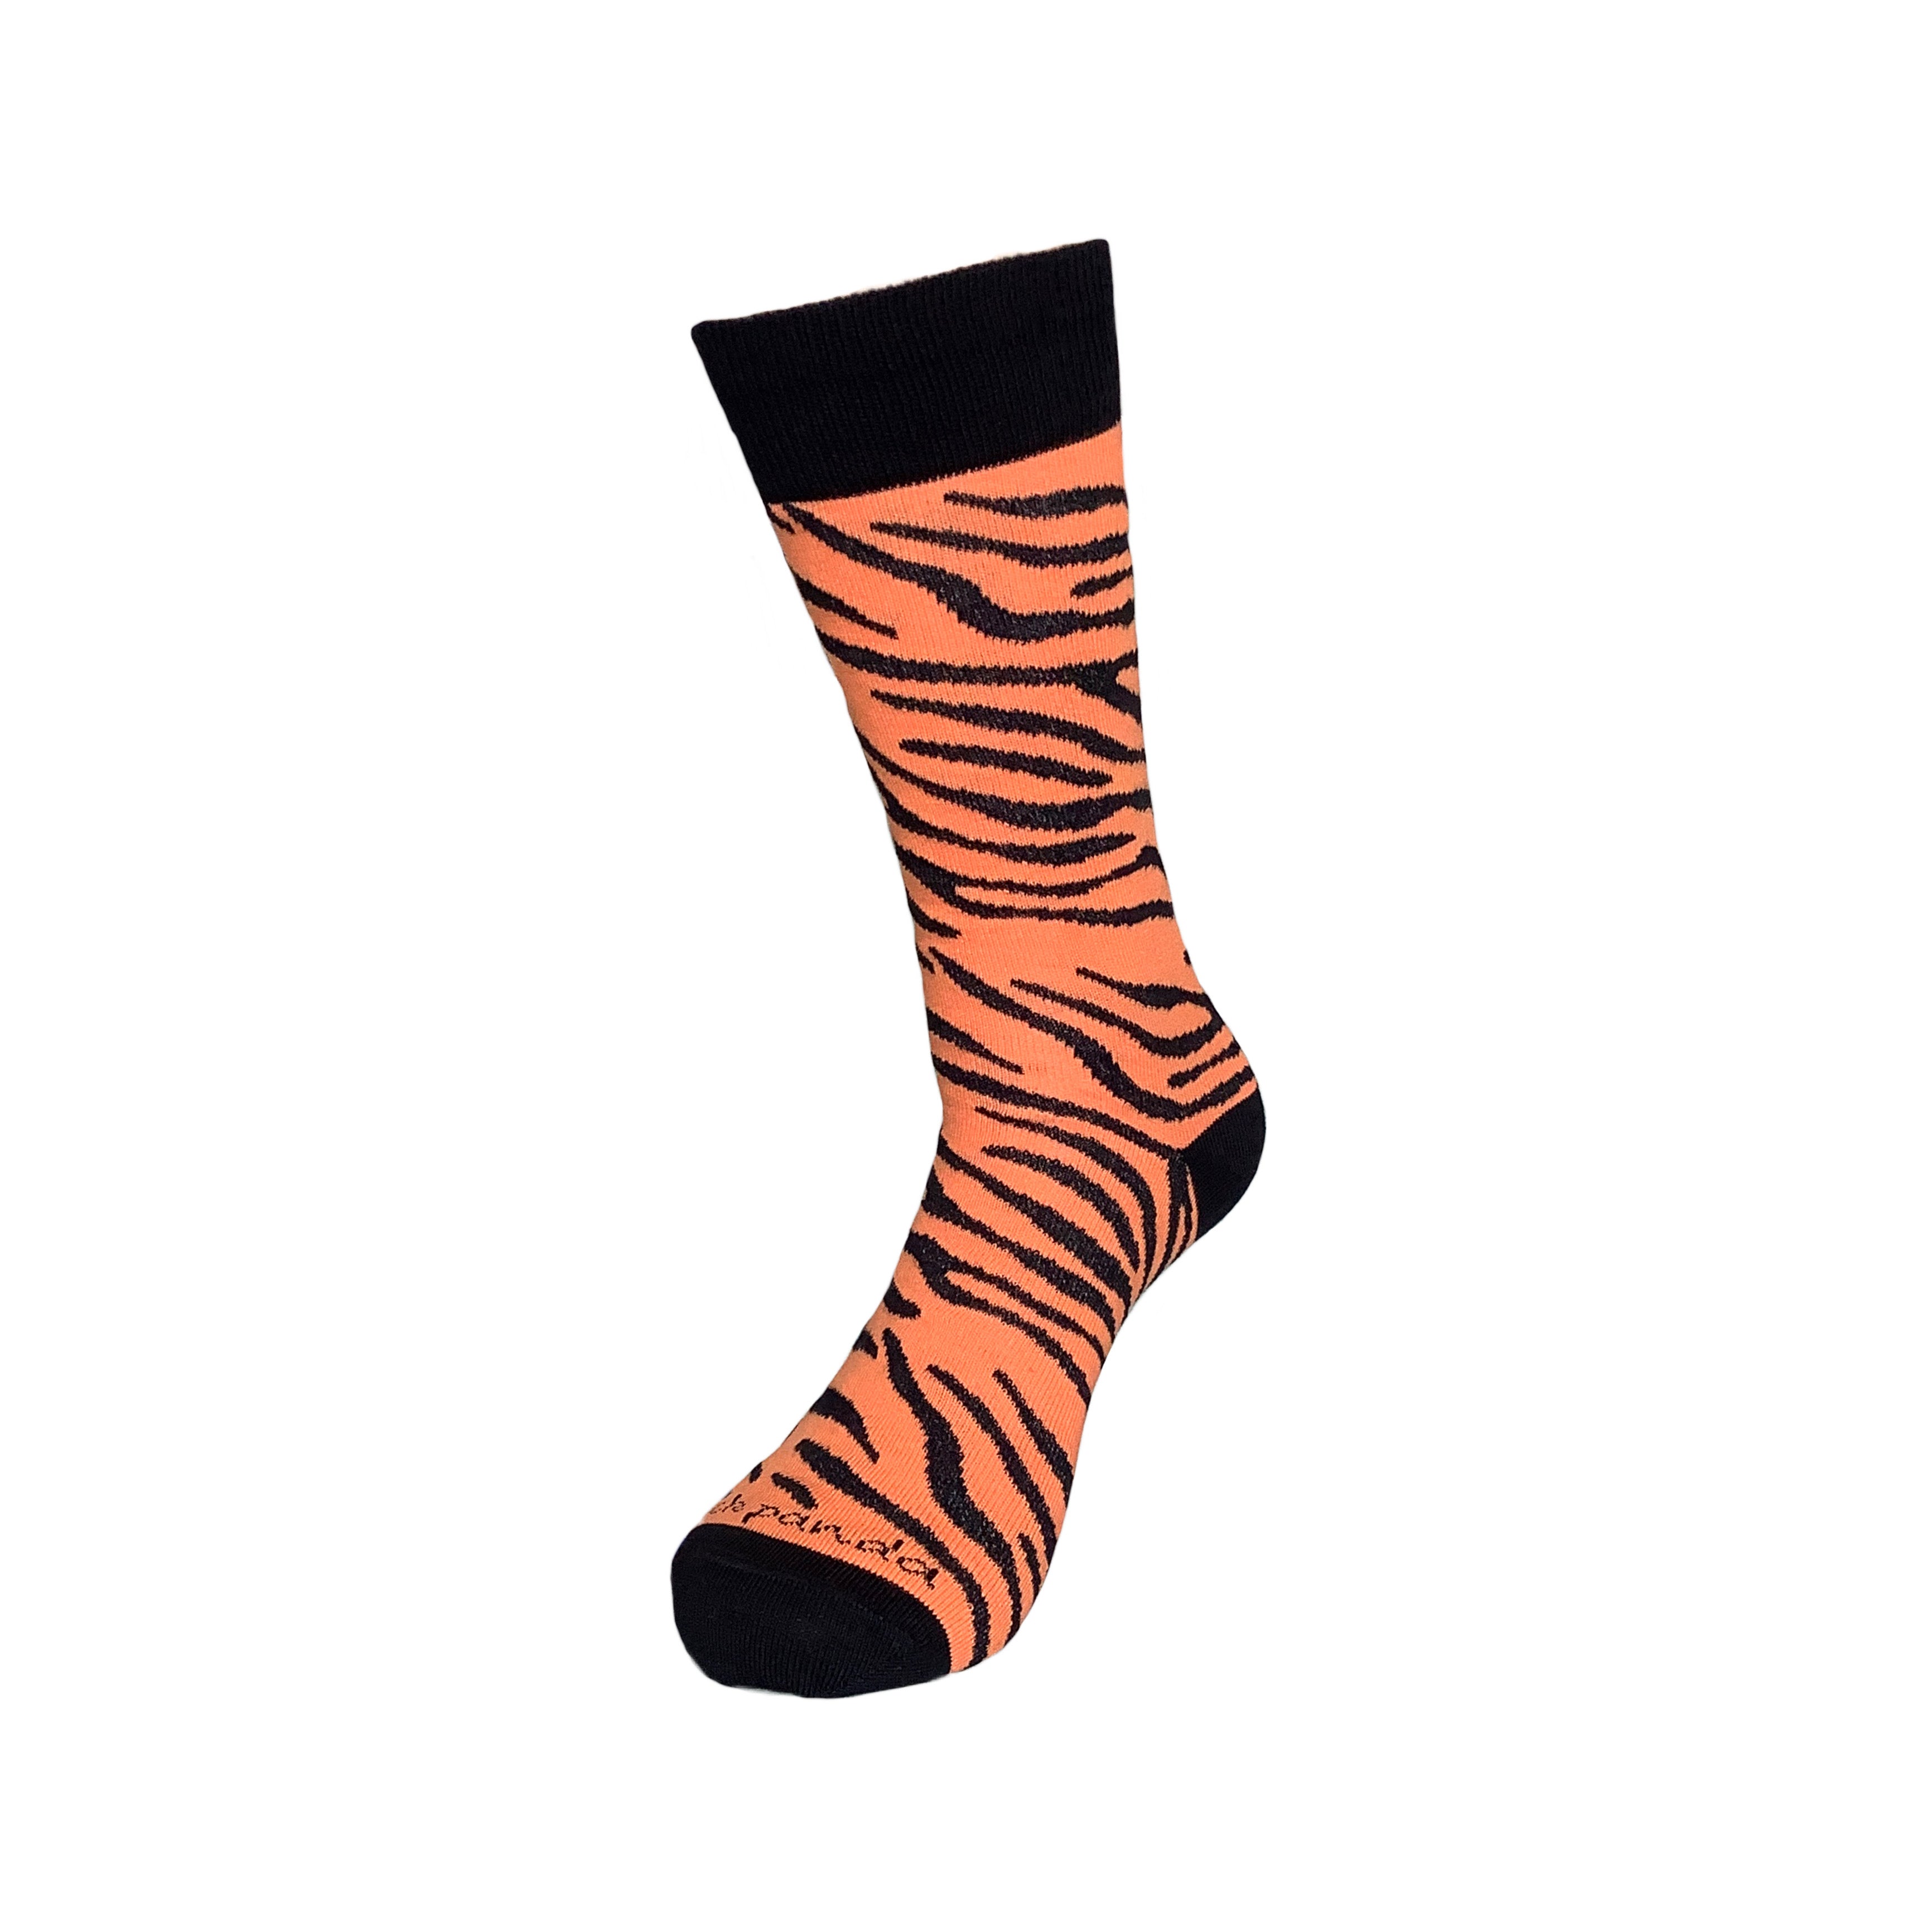 Tiger Striped Socks from the Sock Panda (Adult Medium)